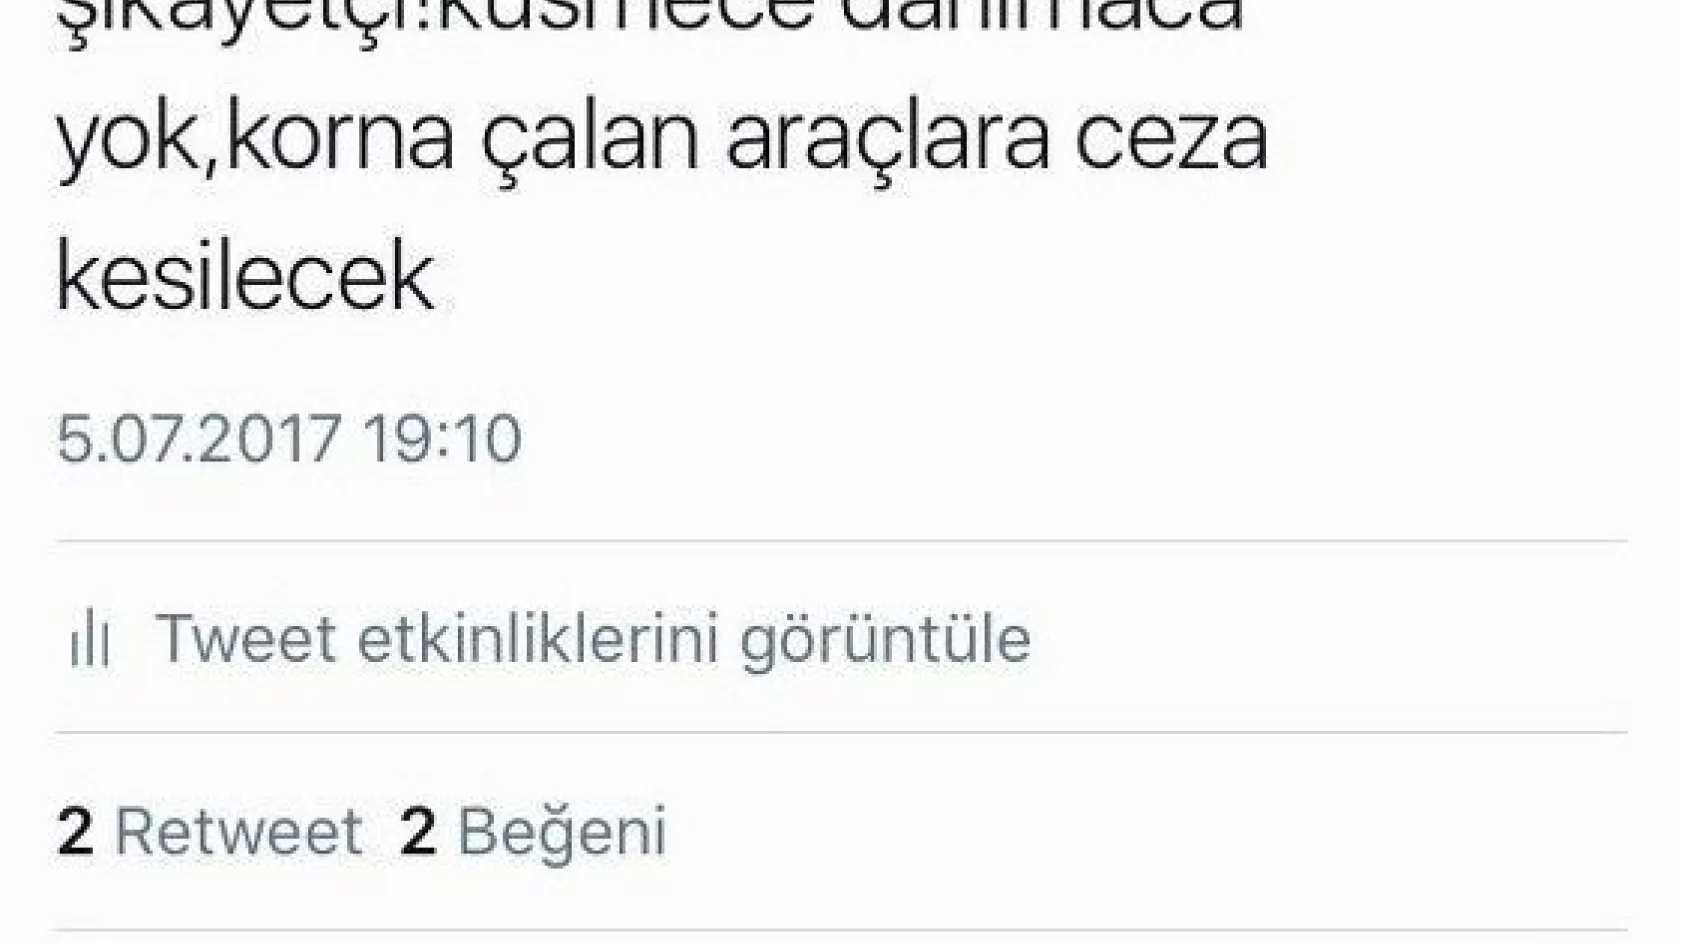 Vali Gül sosyal medyadan 'korna' uyarısı yaptı
